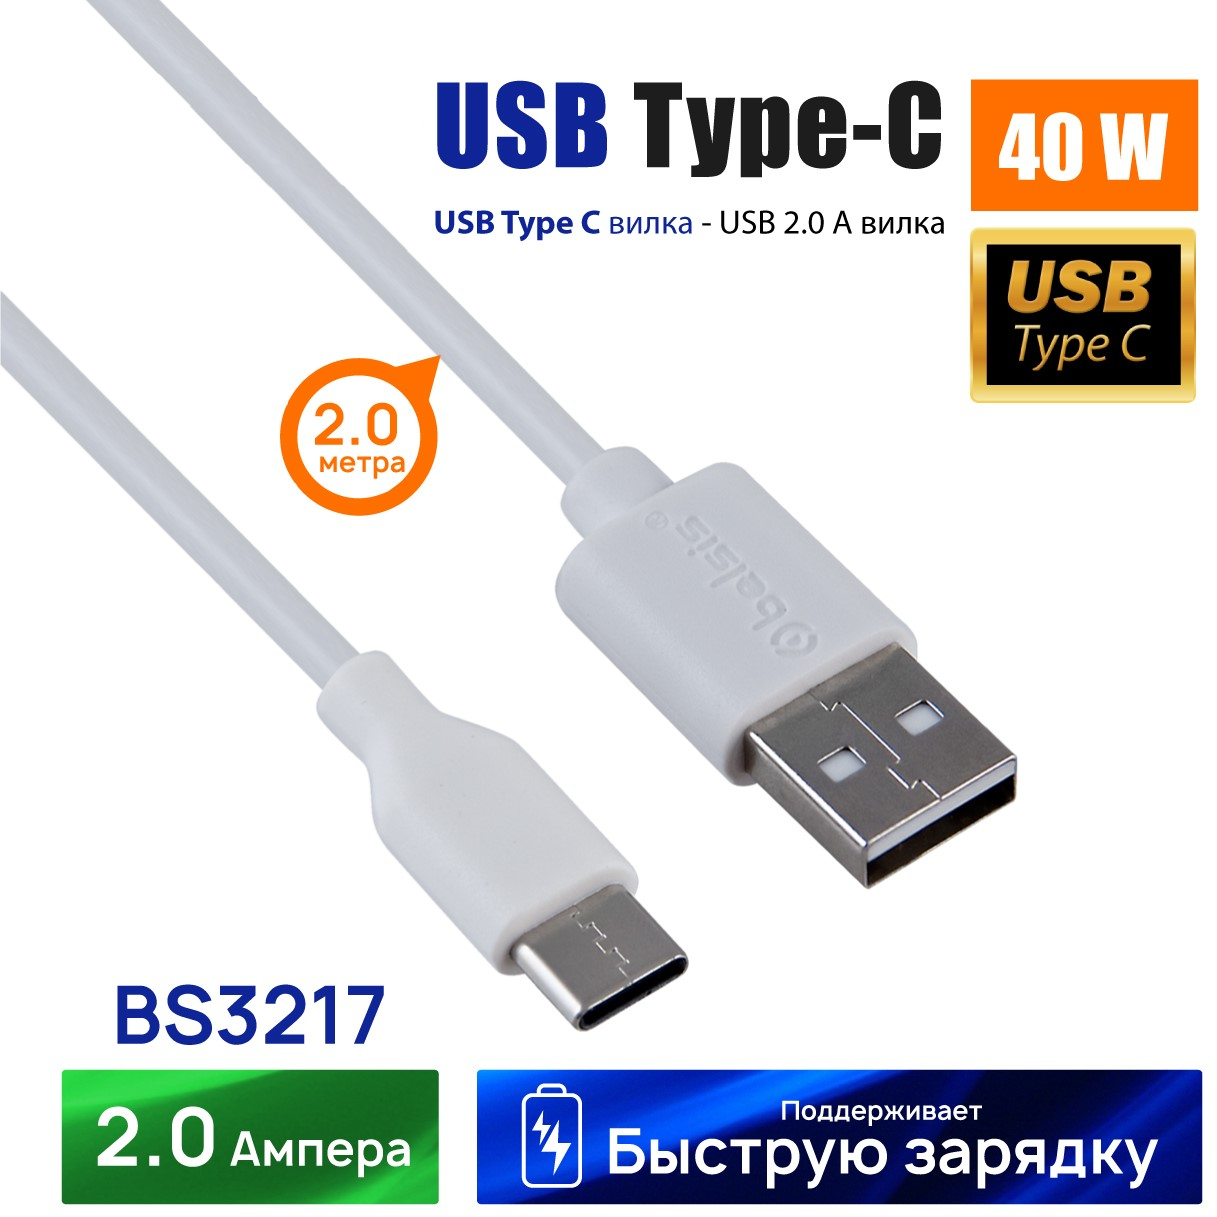 Кабель для зарядки USB Type C Belsis, быстрая зарядка 40W, 2A, 2 метра/BS3217